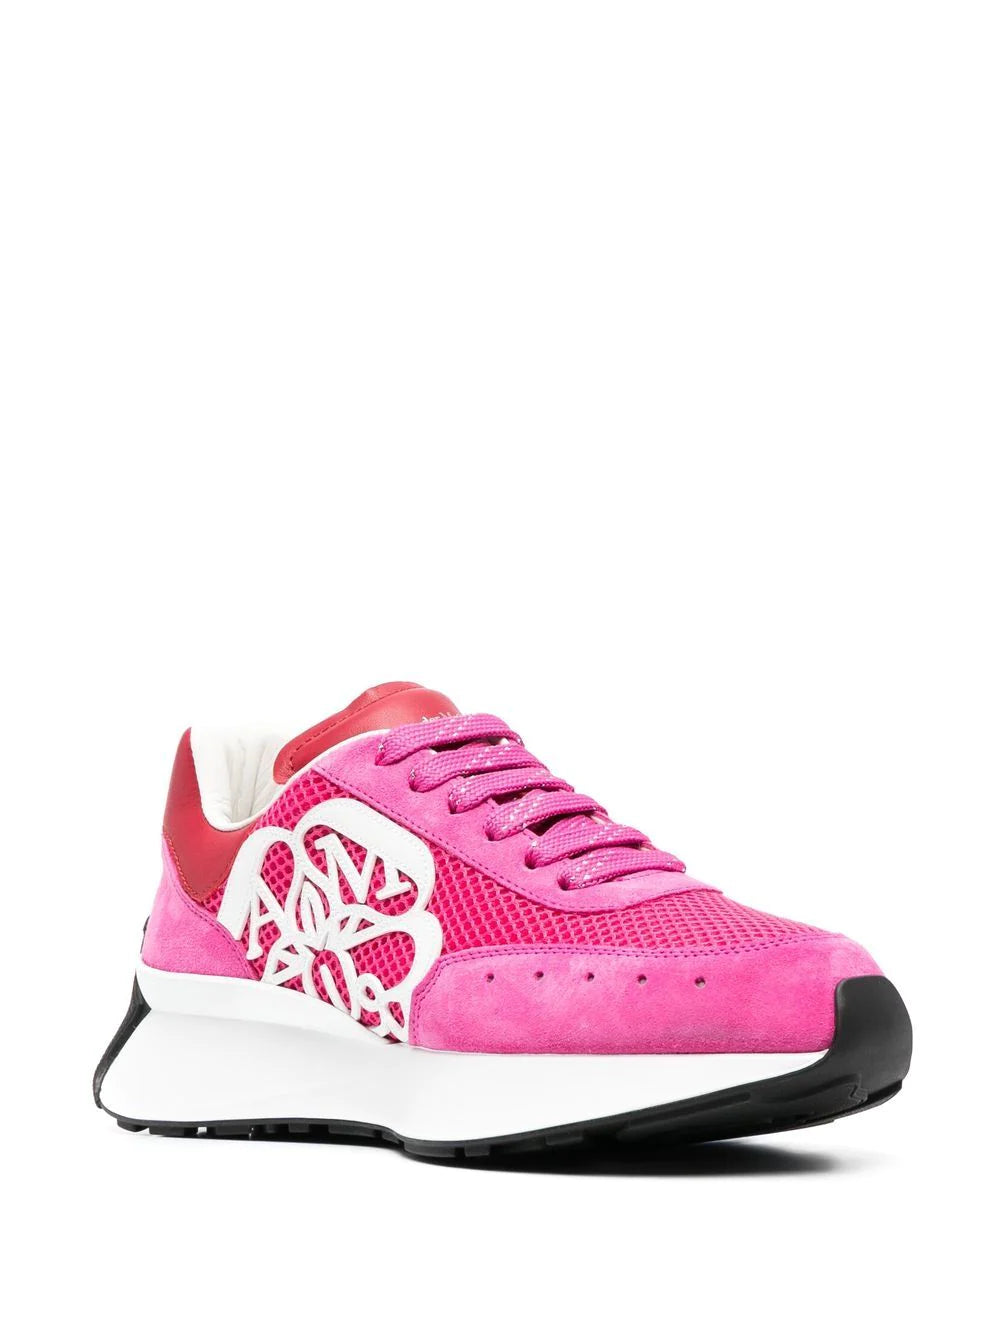 Alexander McQueen Oversize Platform Sneakers White/Pink Glitter Size 38.5 | Alexander  mcqueen shoes, Platform sneakers, Sneakers white